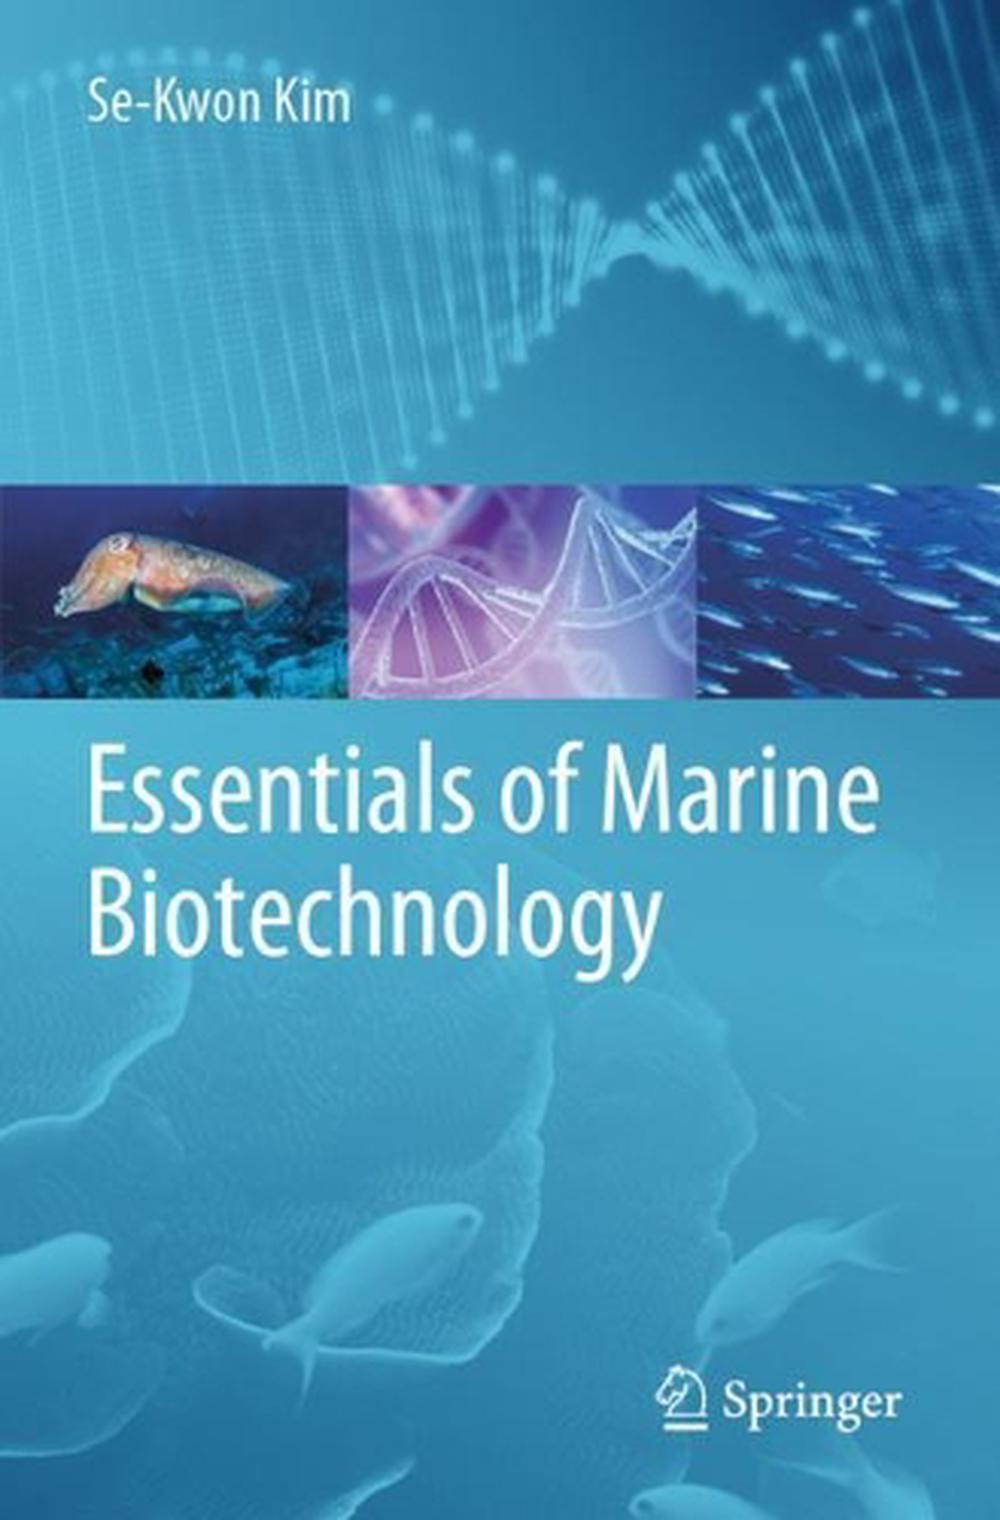 Essentials of Marine Biotechnology by SeKwon Kim (English) Paperback